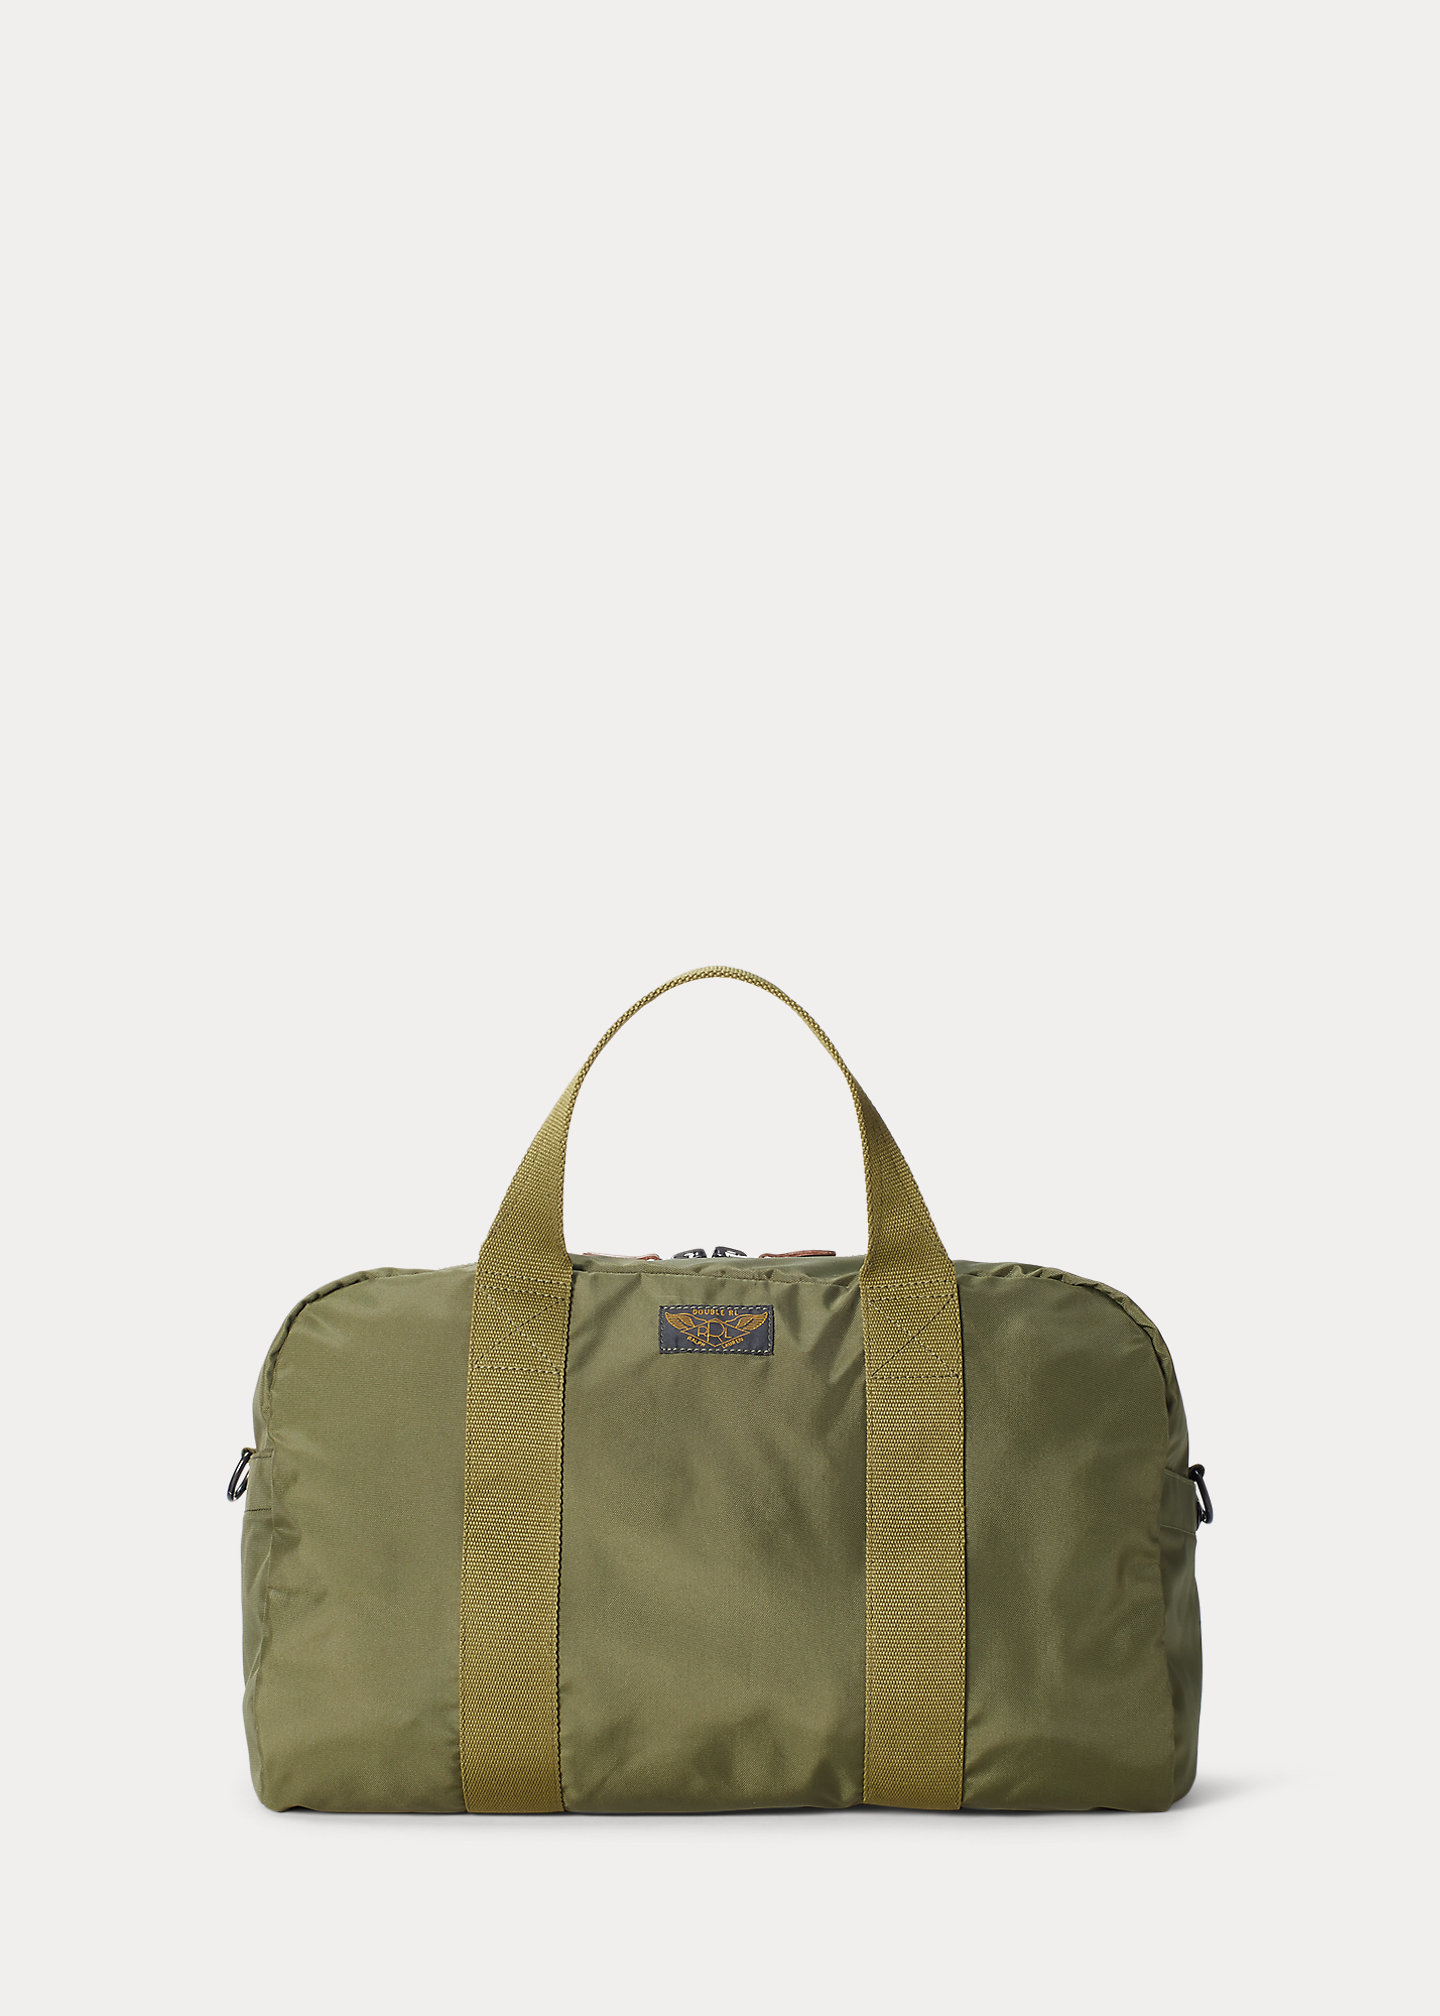 stylish handbags Bags